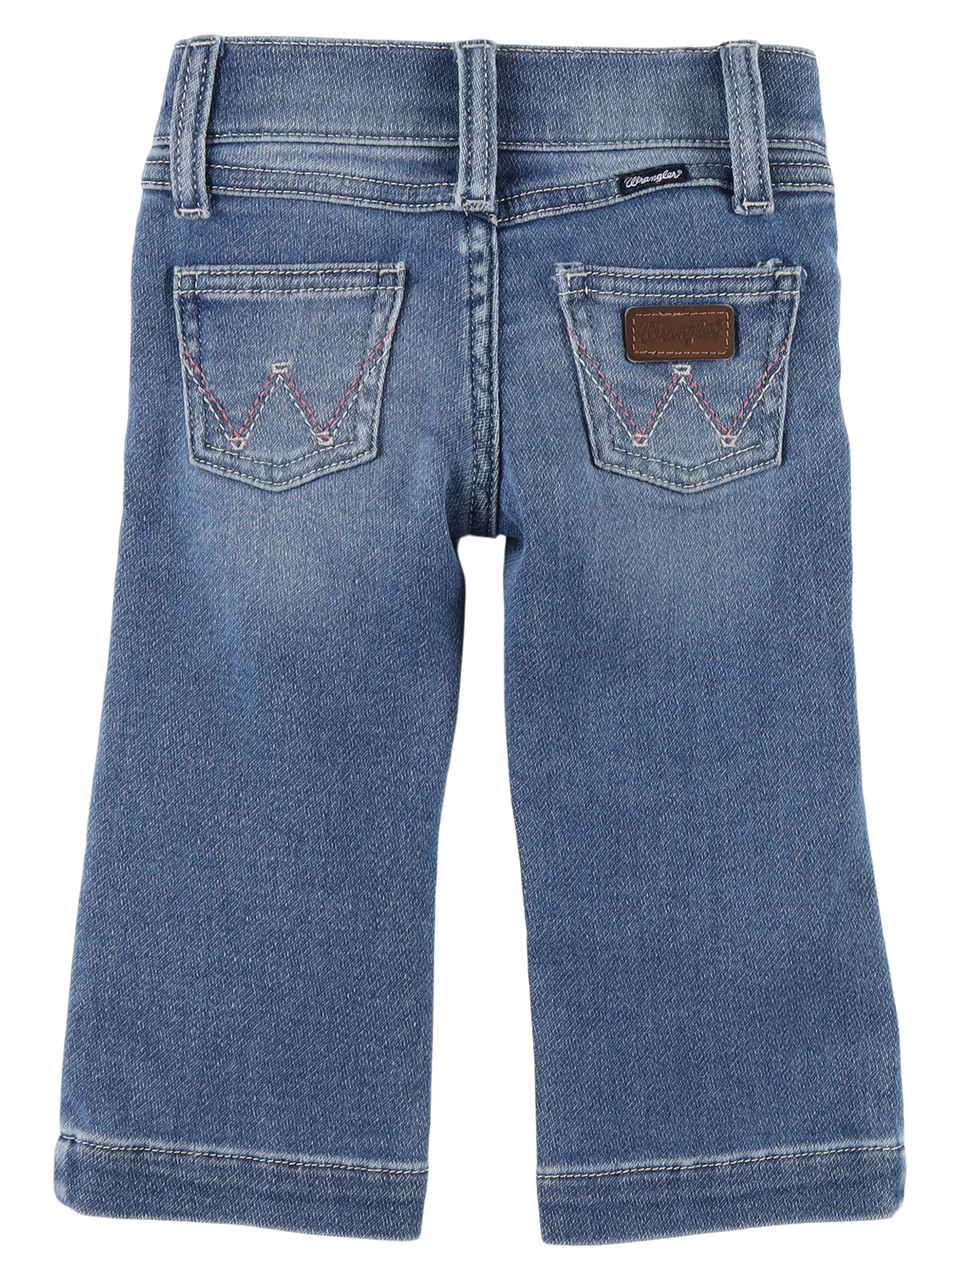 The Dally Girl's Trouser Jean – Savannah Sevens western life{&}style